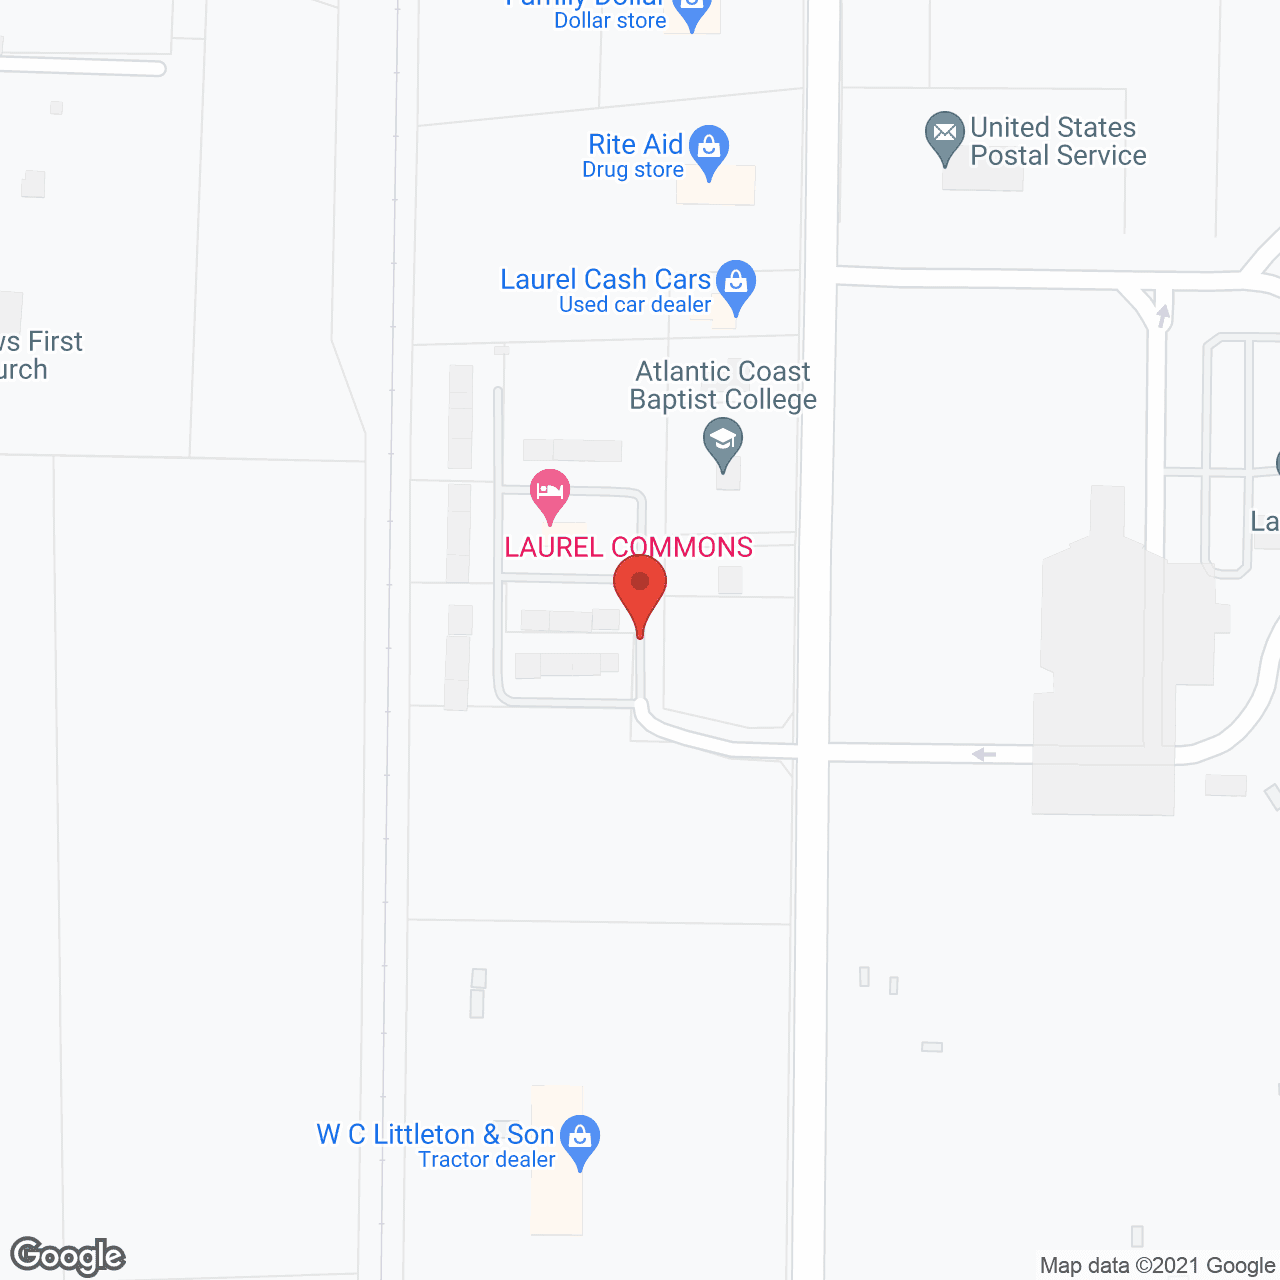 Laurel Commons in google map